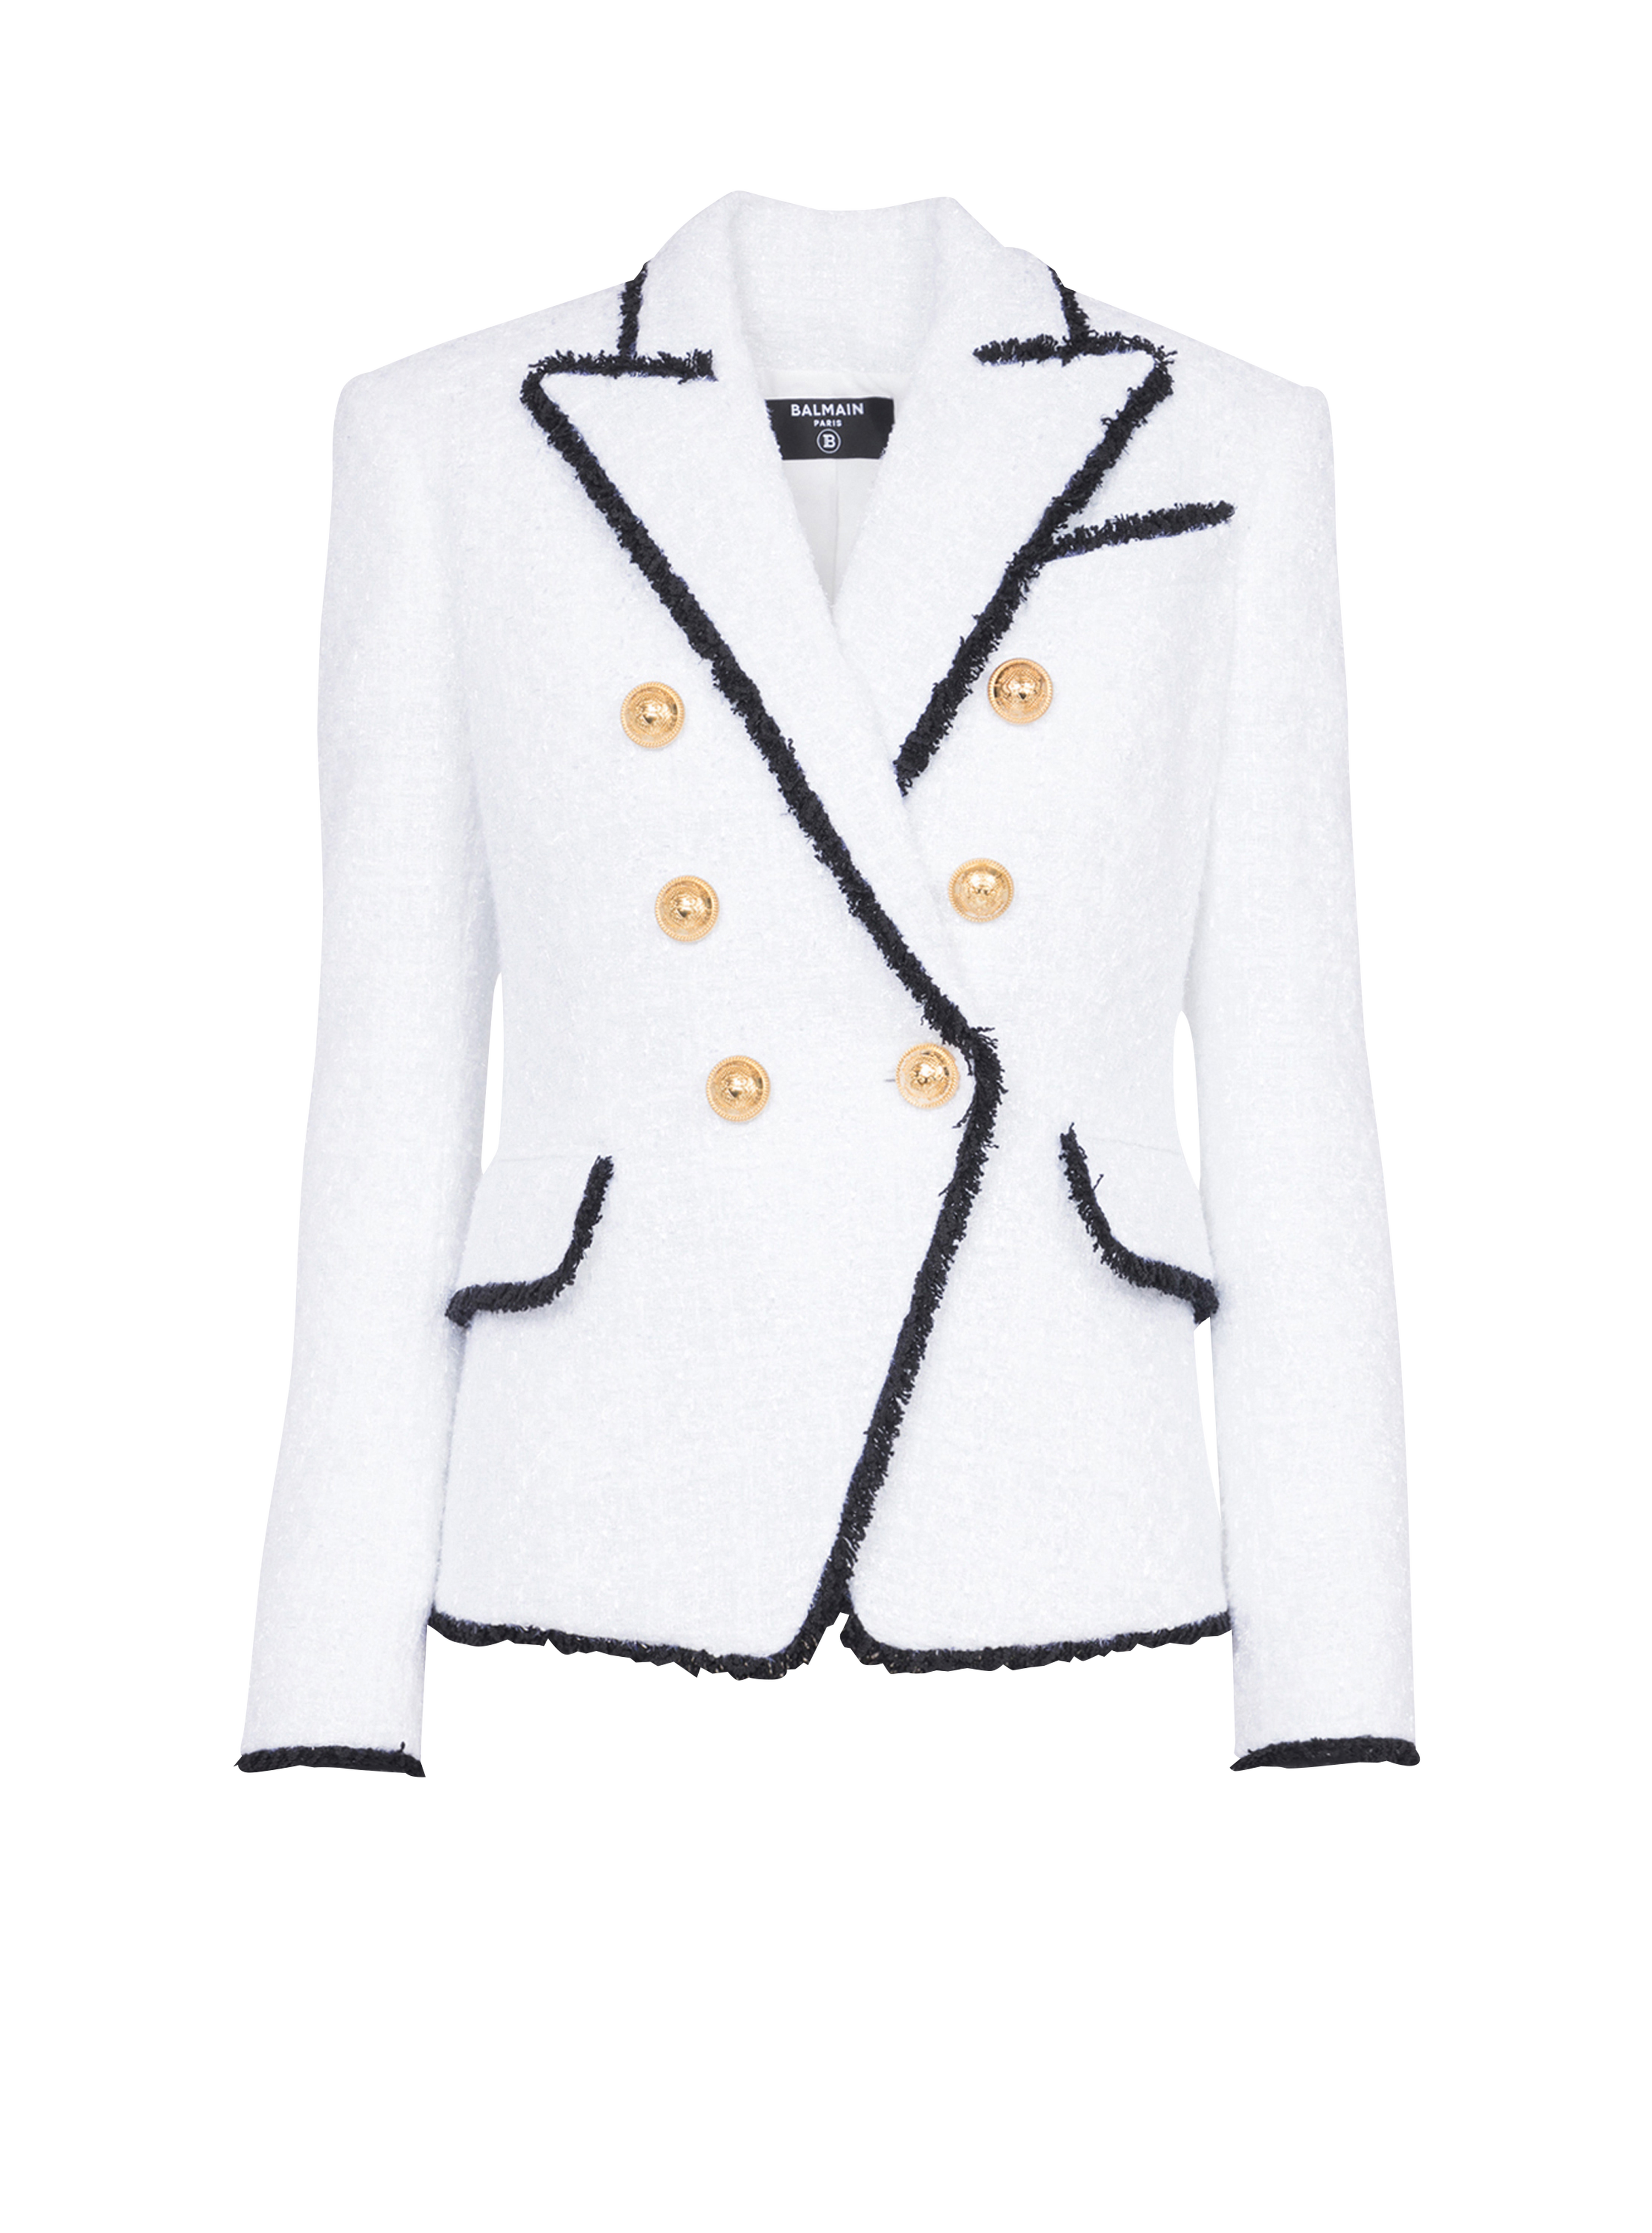 Tweed jacket, white